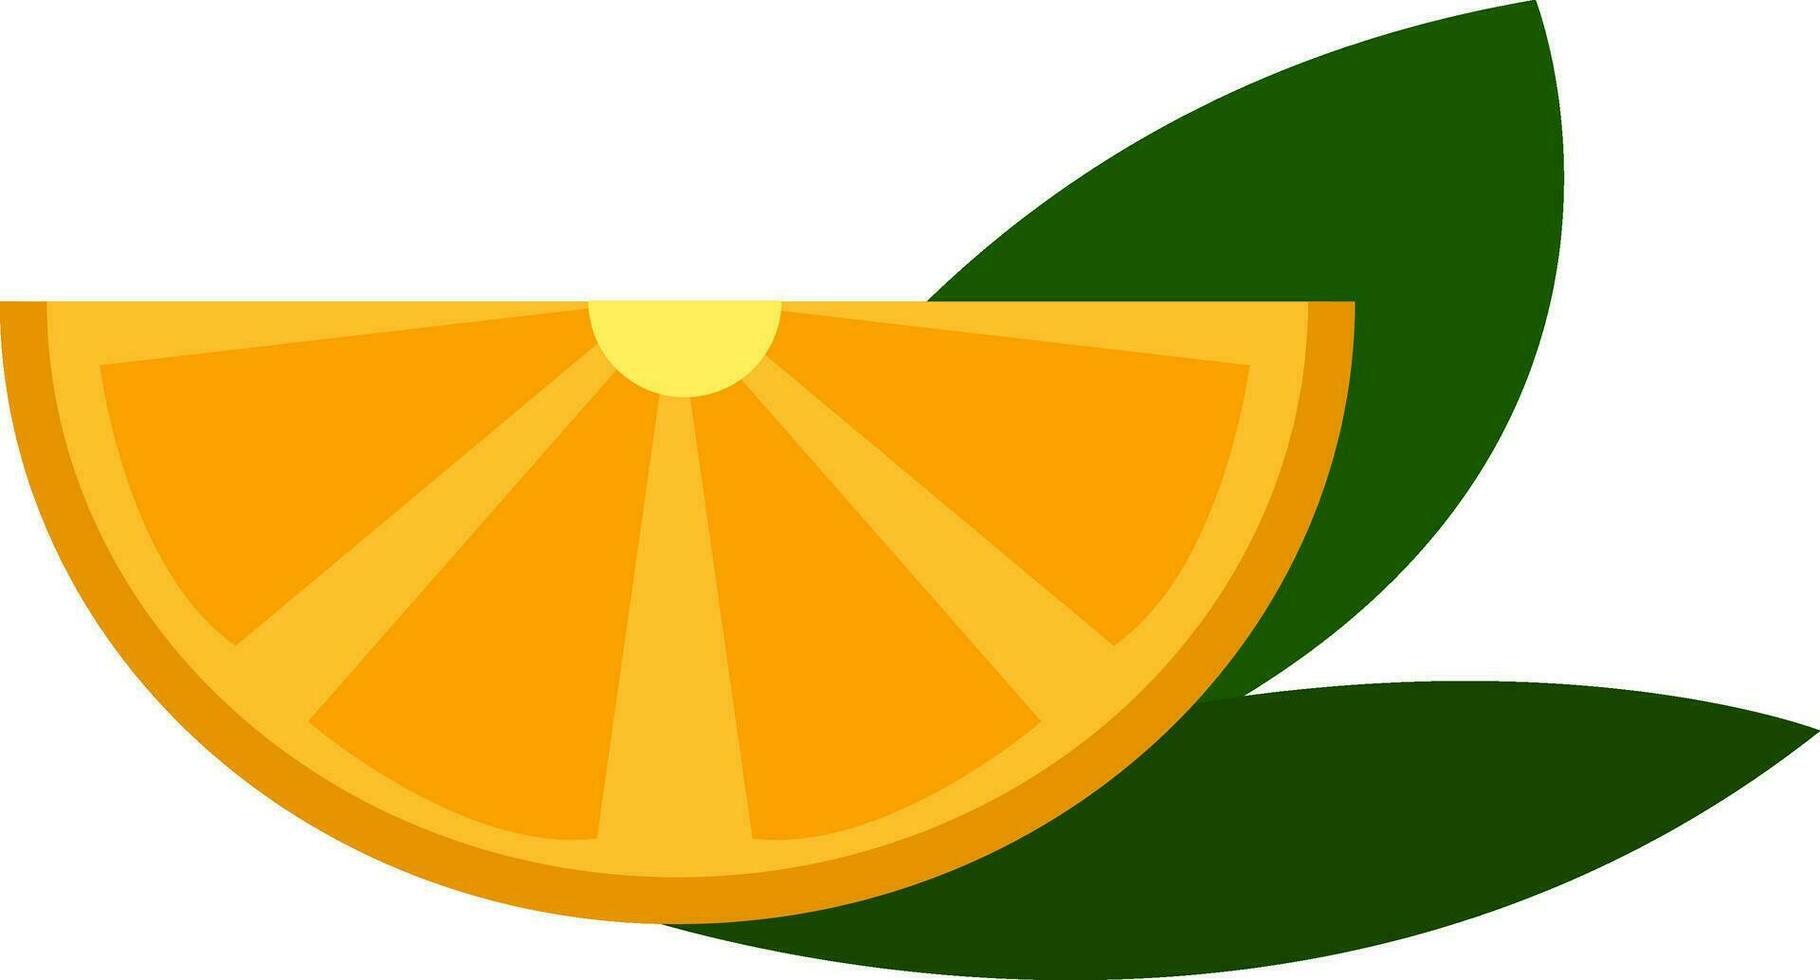 Yellow lemon slice with green leaves   vector illustration on white background